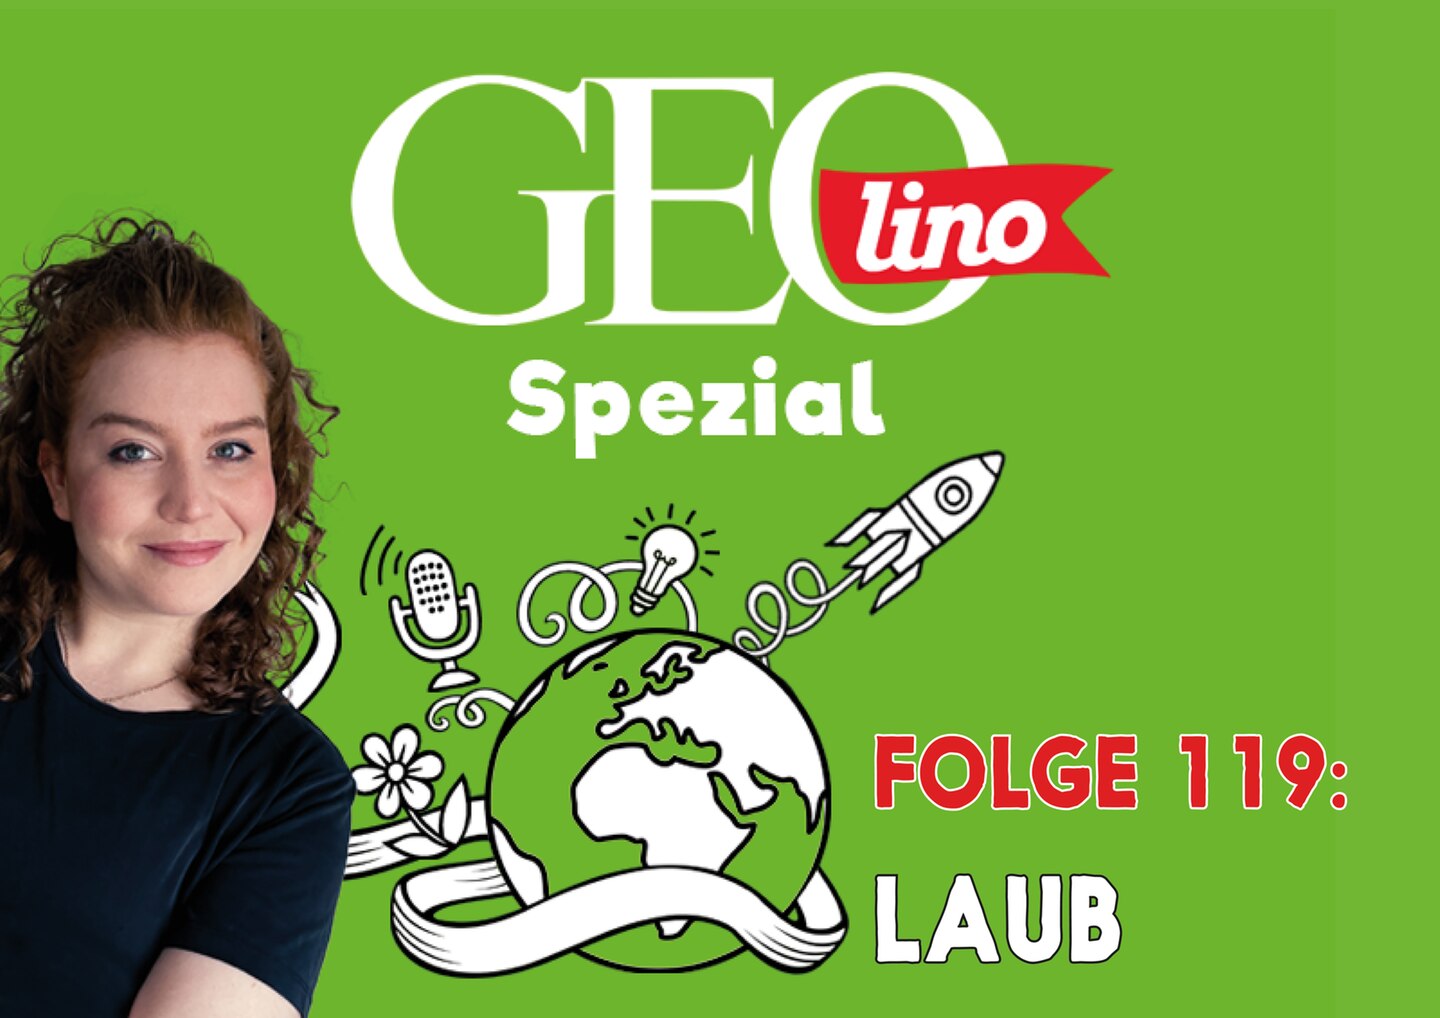 In Folge 119 unseres GEOlino-Podcasts geht es um Laub